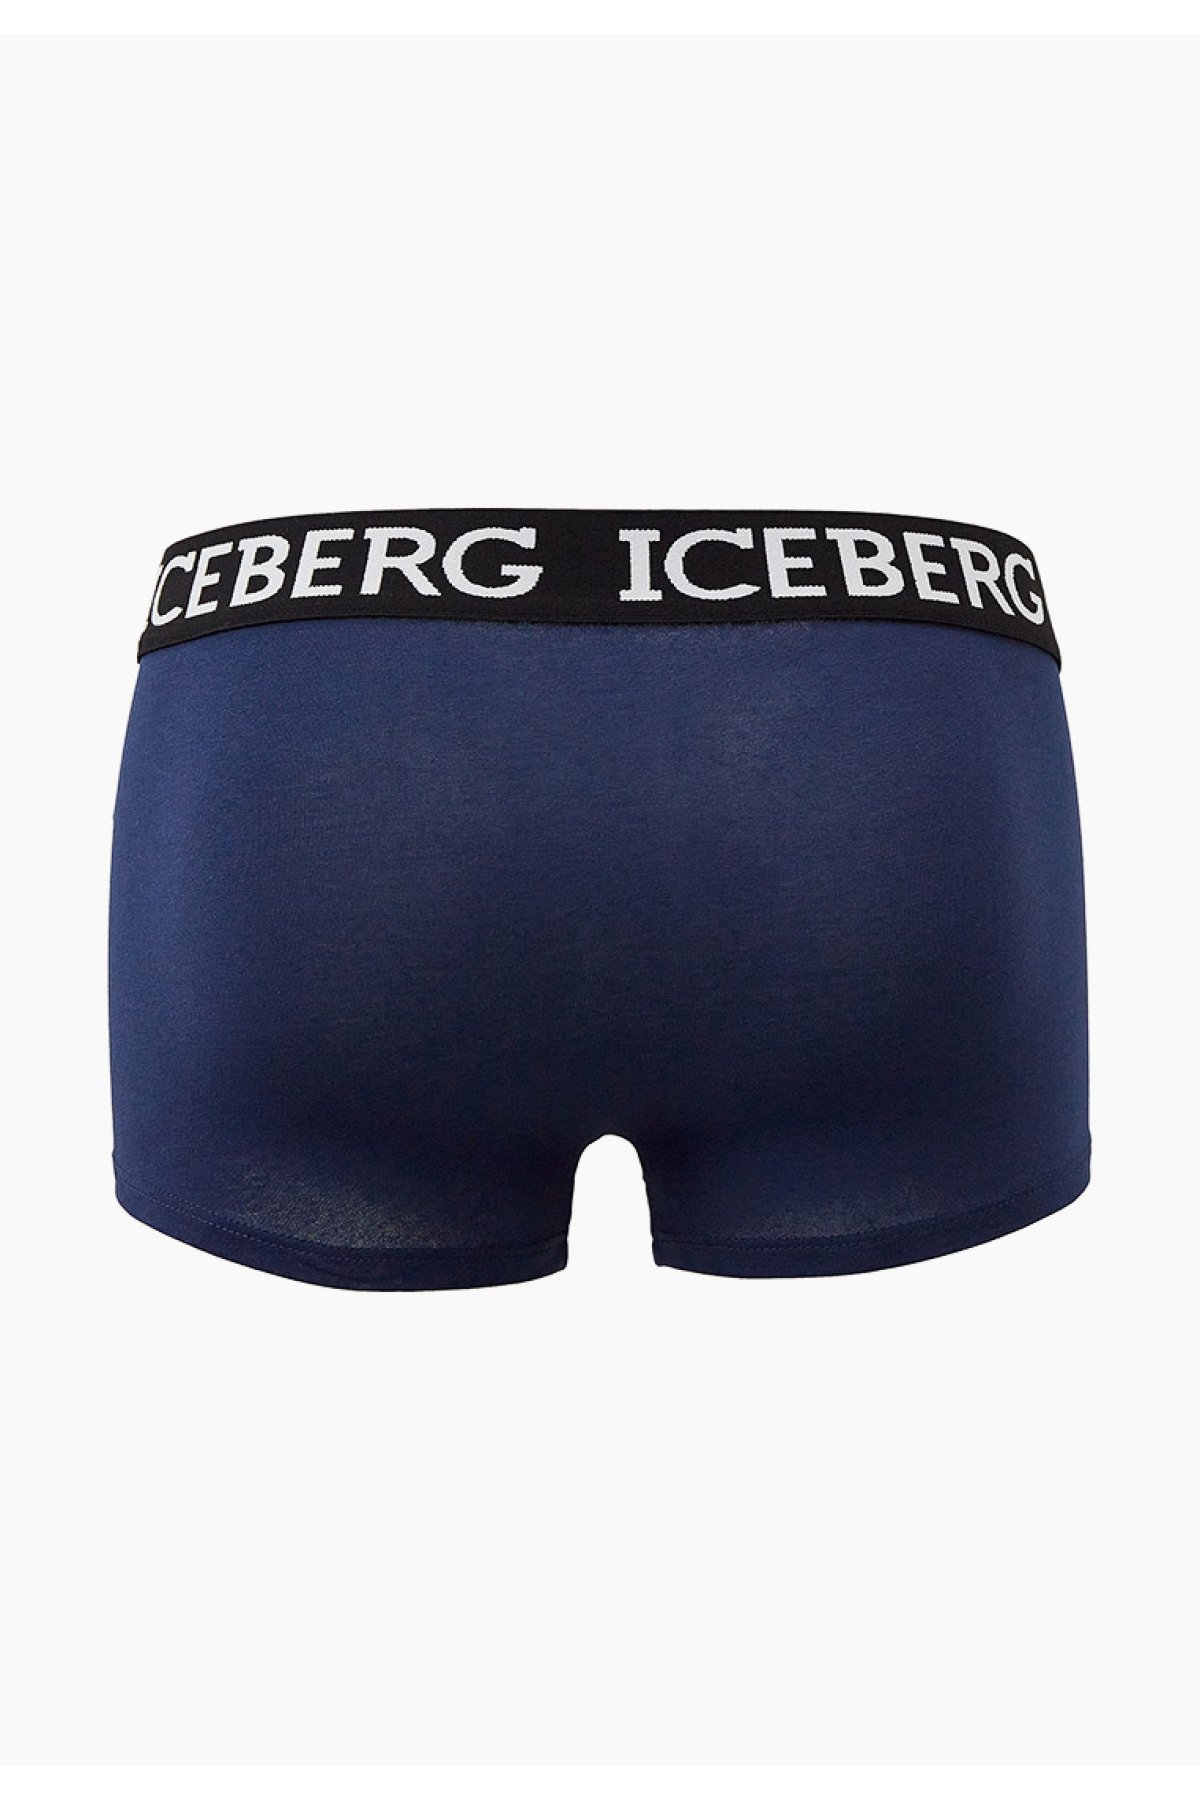 Iceberg ICE1UTR02